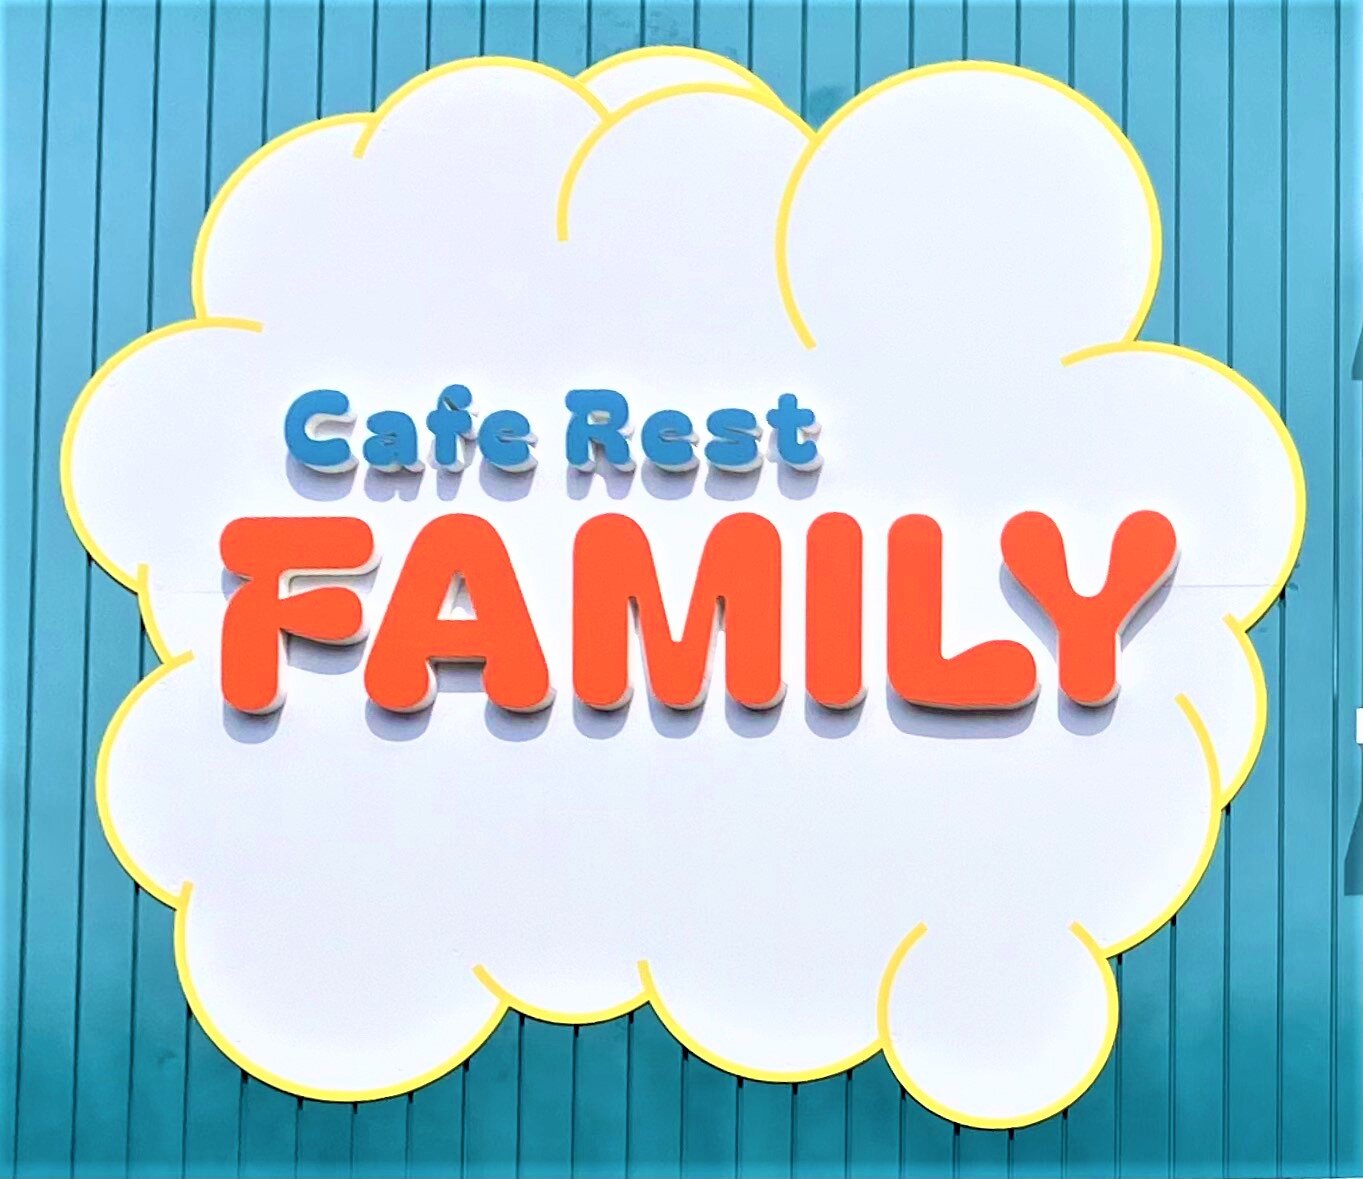 Cafe Rest FAMILY